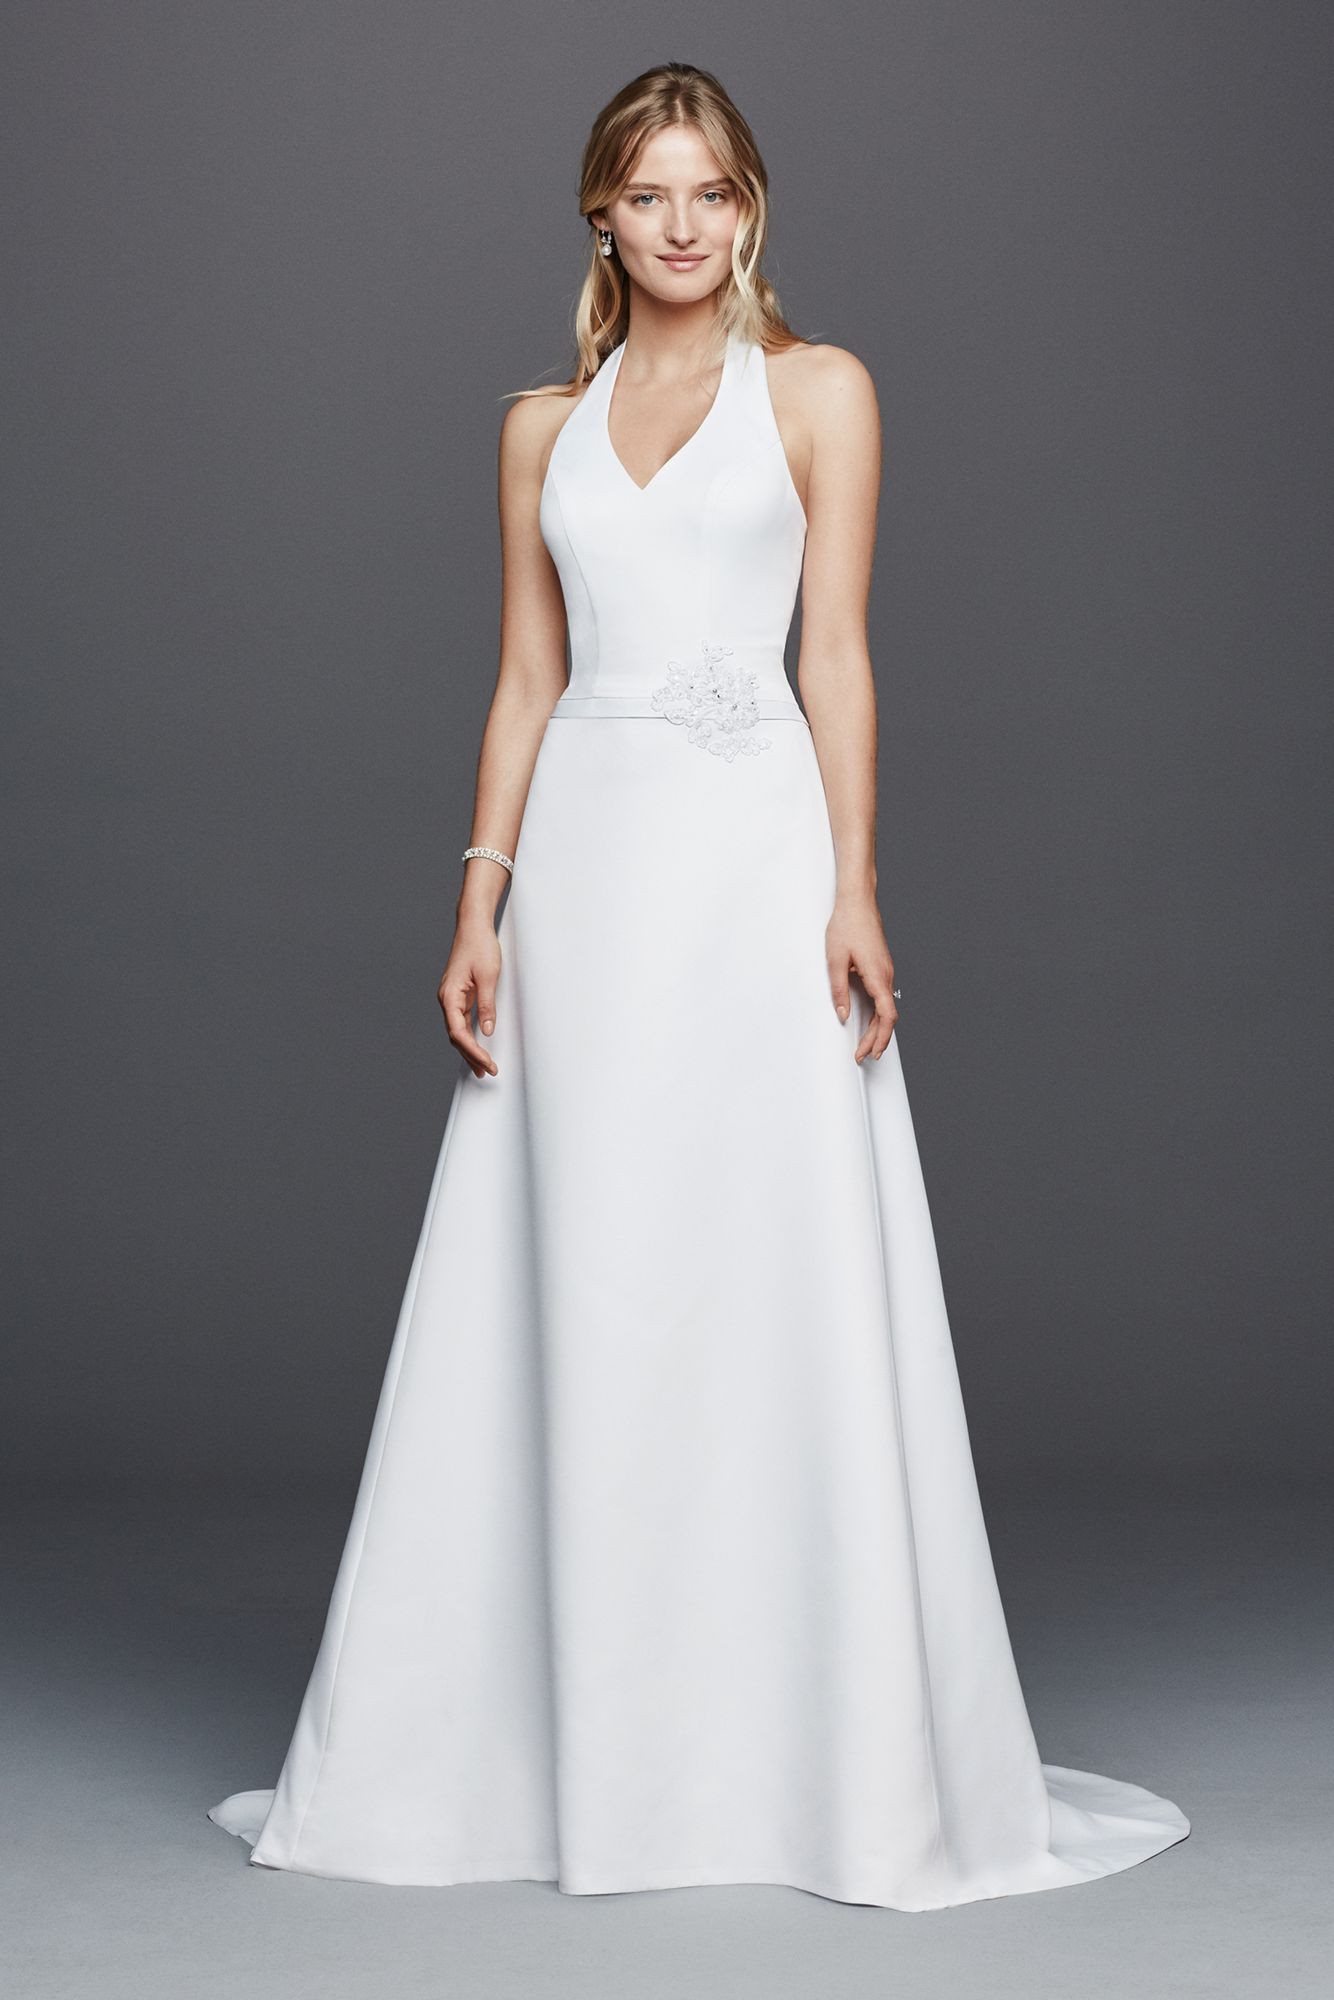 Halter Wedding Gowns
 Halter V neck Wedding Dress with Flower Detail Style